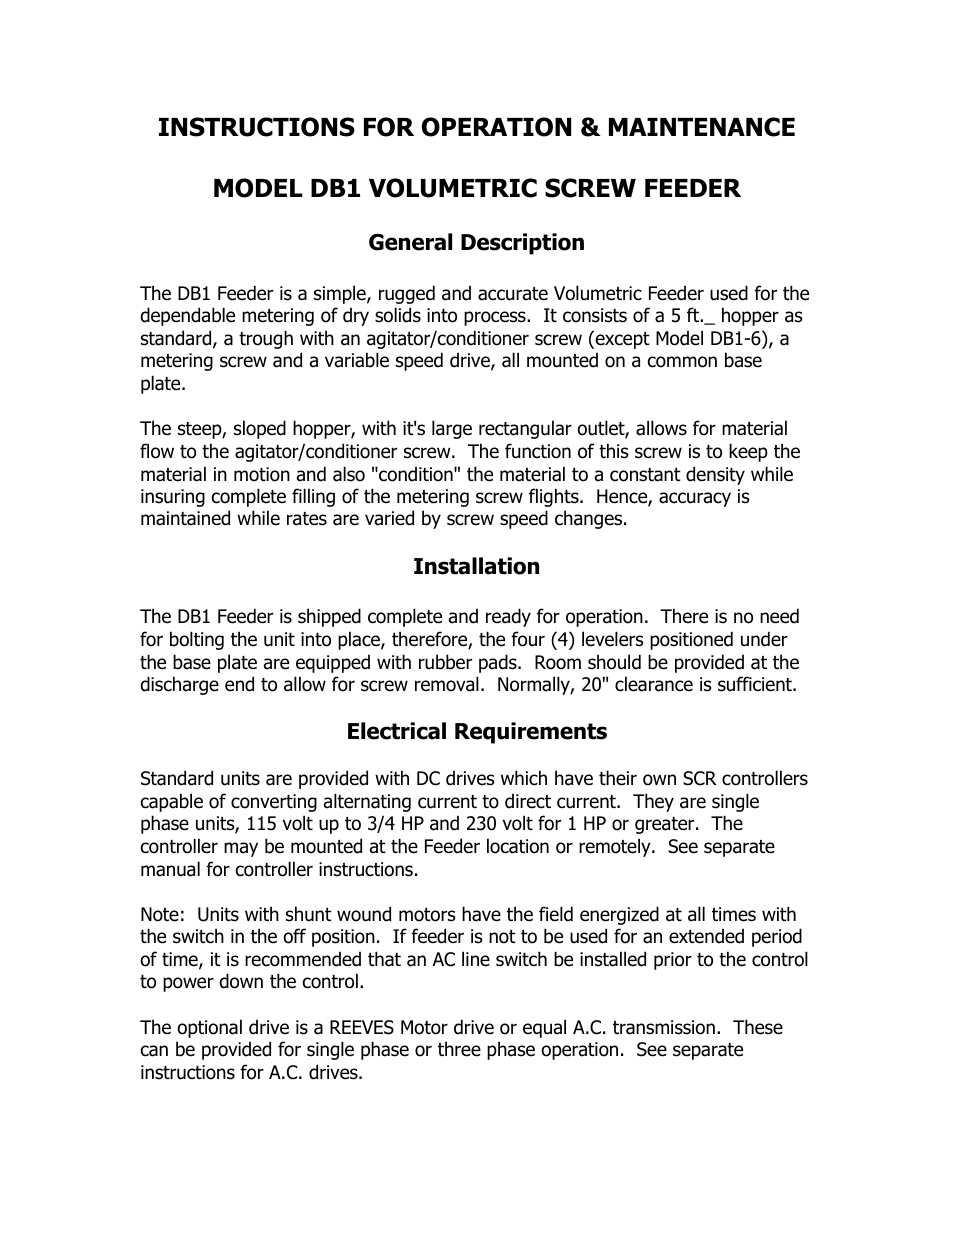 Model DBI Volumetric Screw Feeder